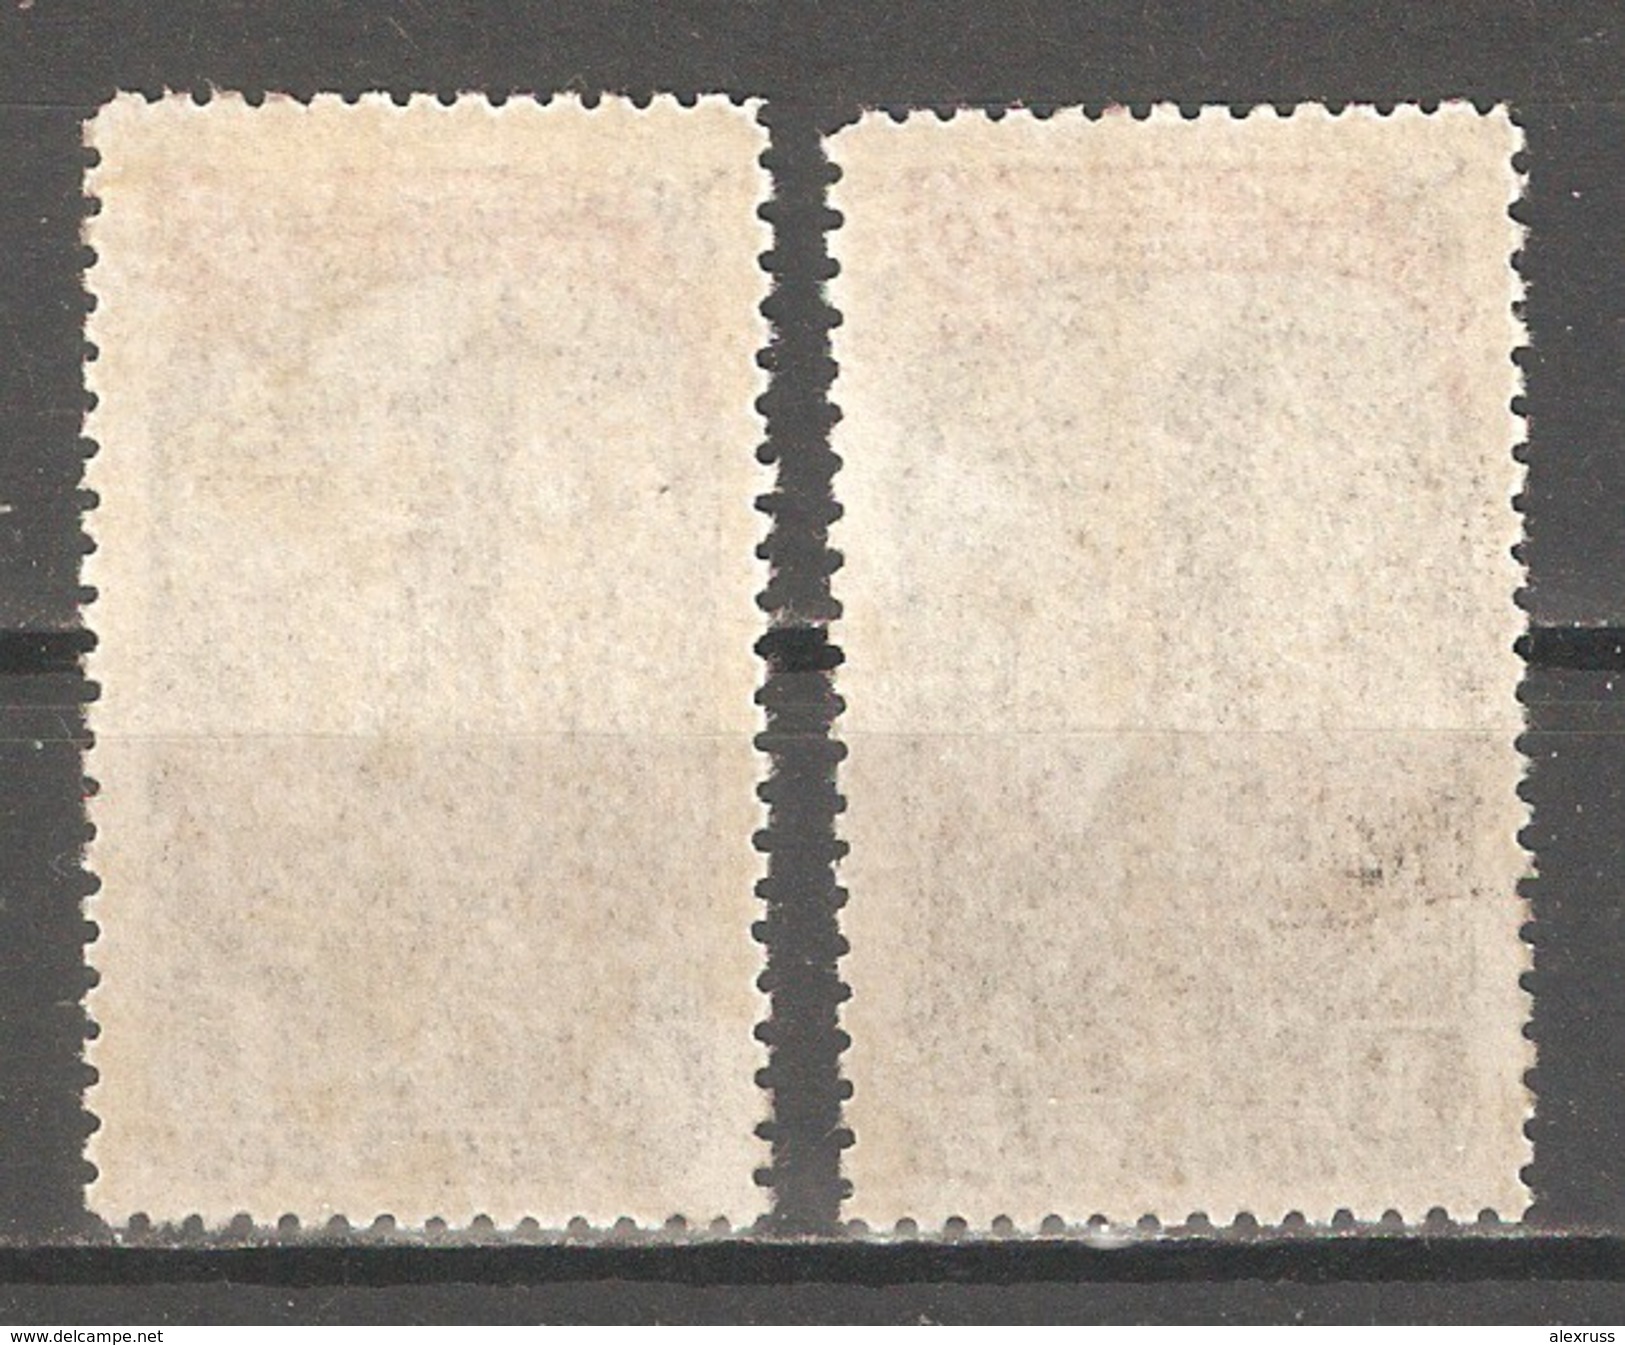 Russia/USSR 1950,Pavlik Morozov ,Letter A Variety+ 40 Kop Has Thicker Font ,Scott # 1445-1446,VF-OG LH - Ungebraucht